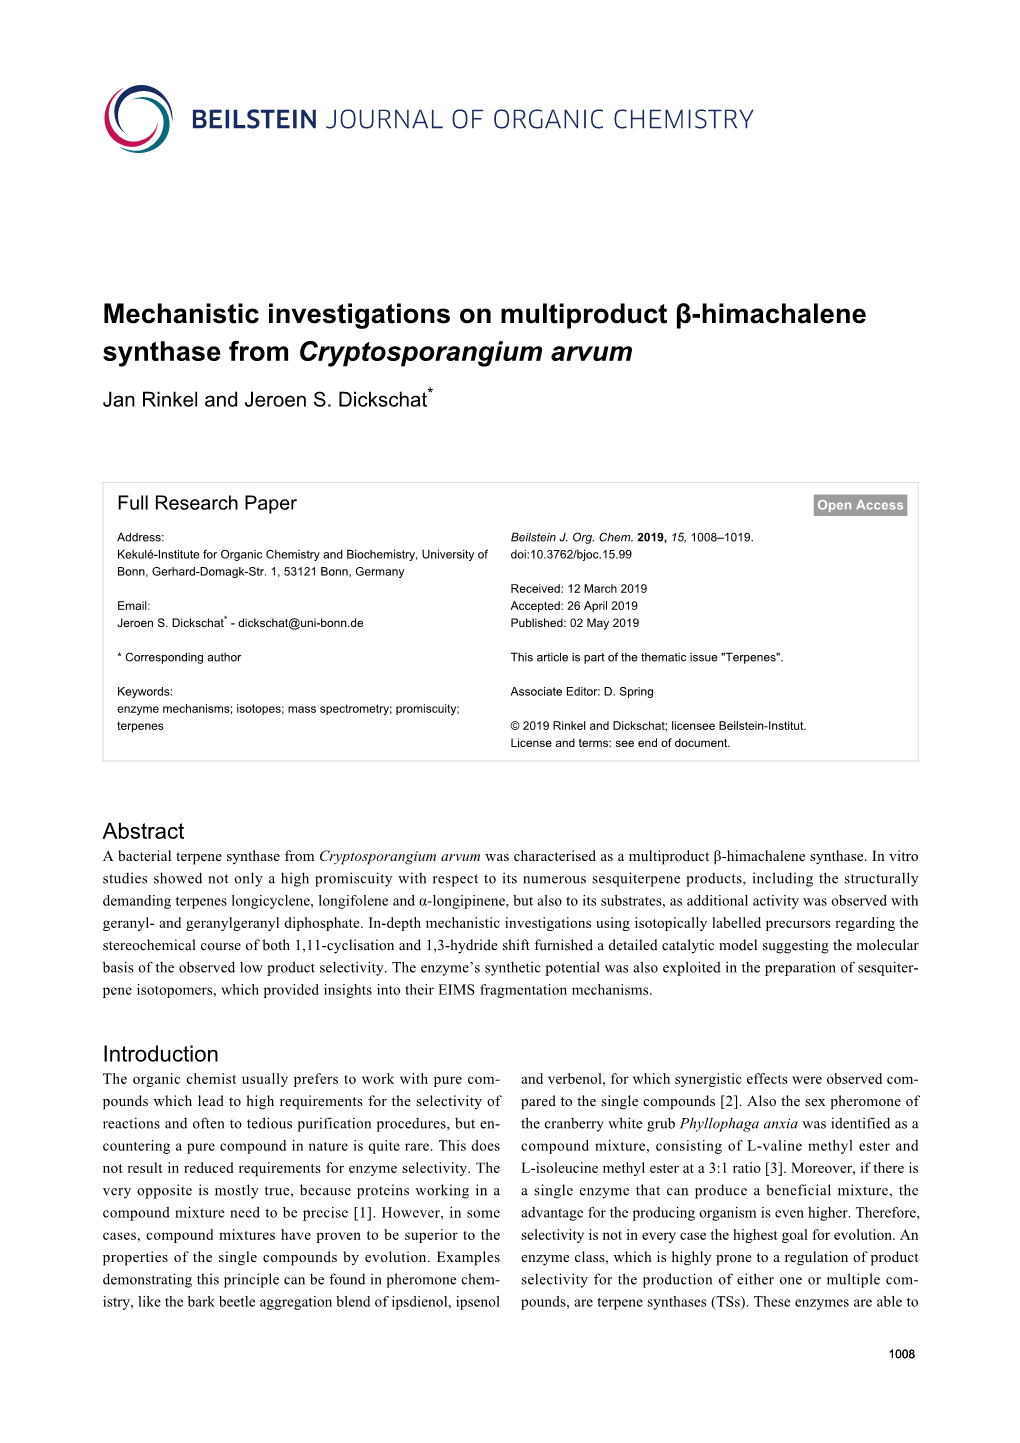 Mechanistic Investigations on Multiproduct Β-Himachalene Synthase from Cryptosporangium Arvum